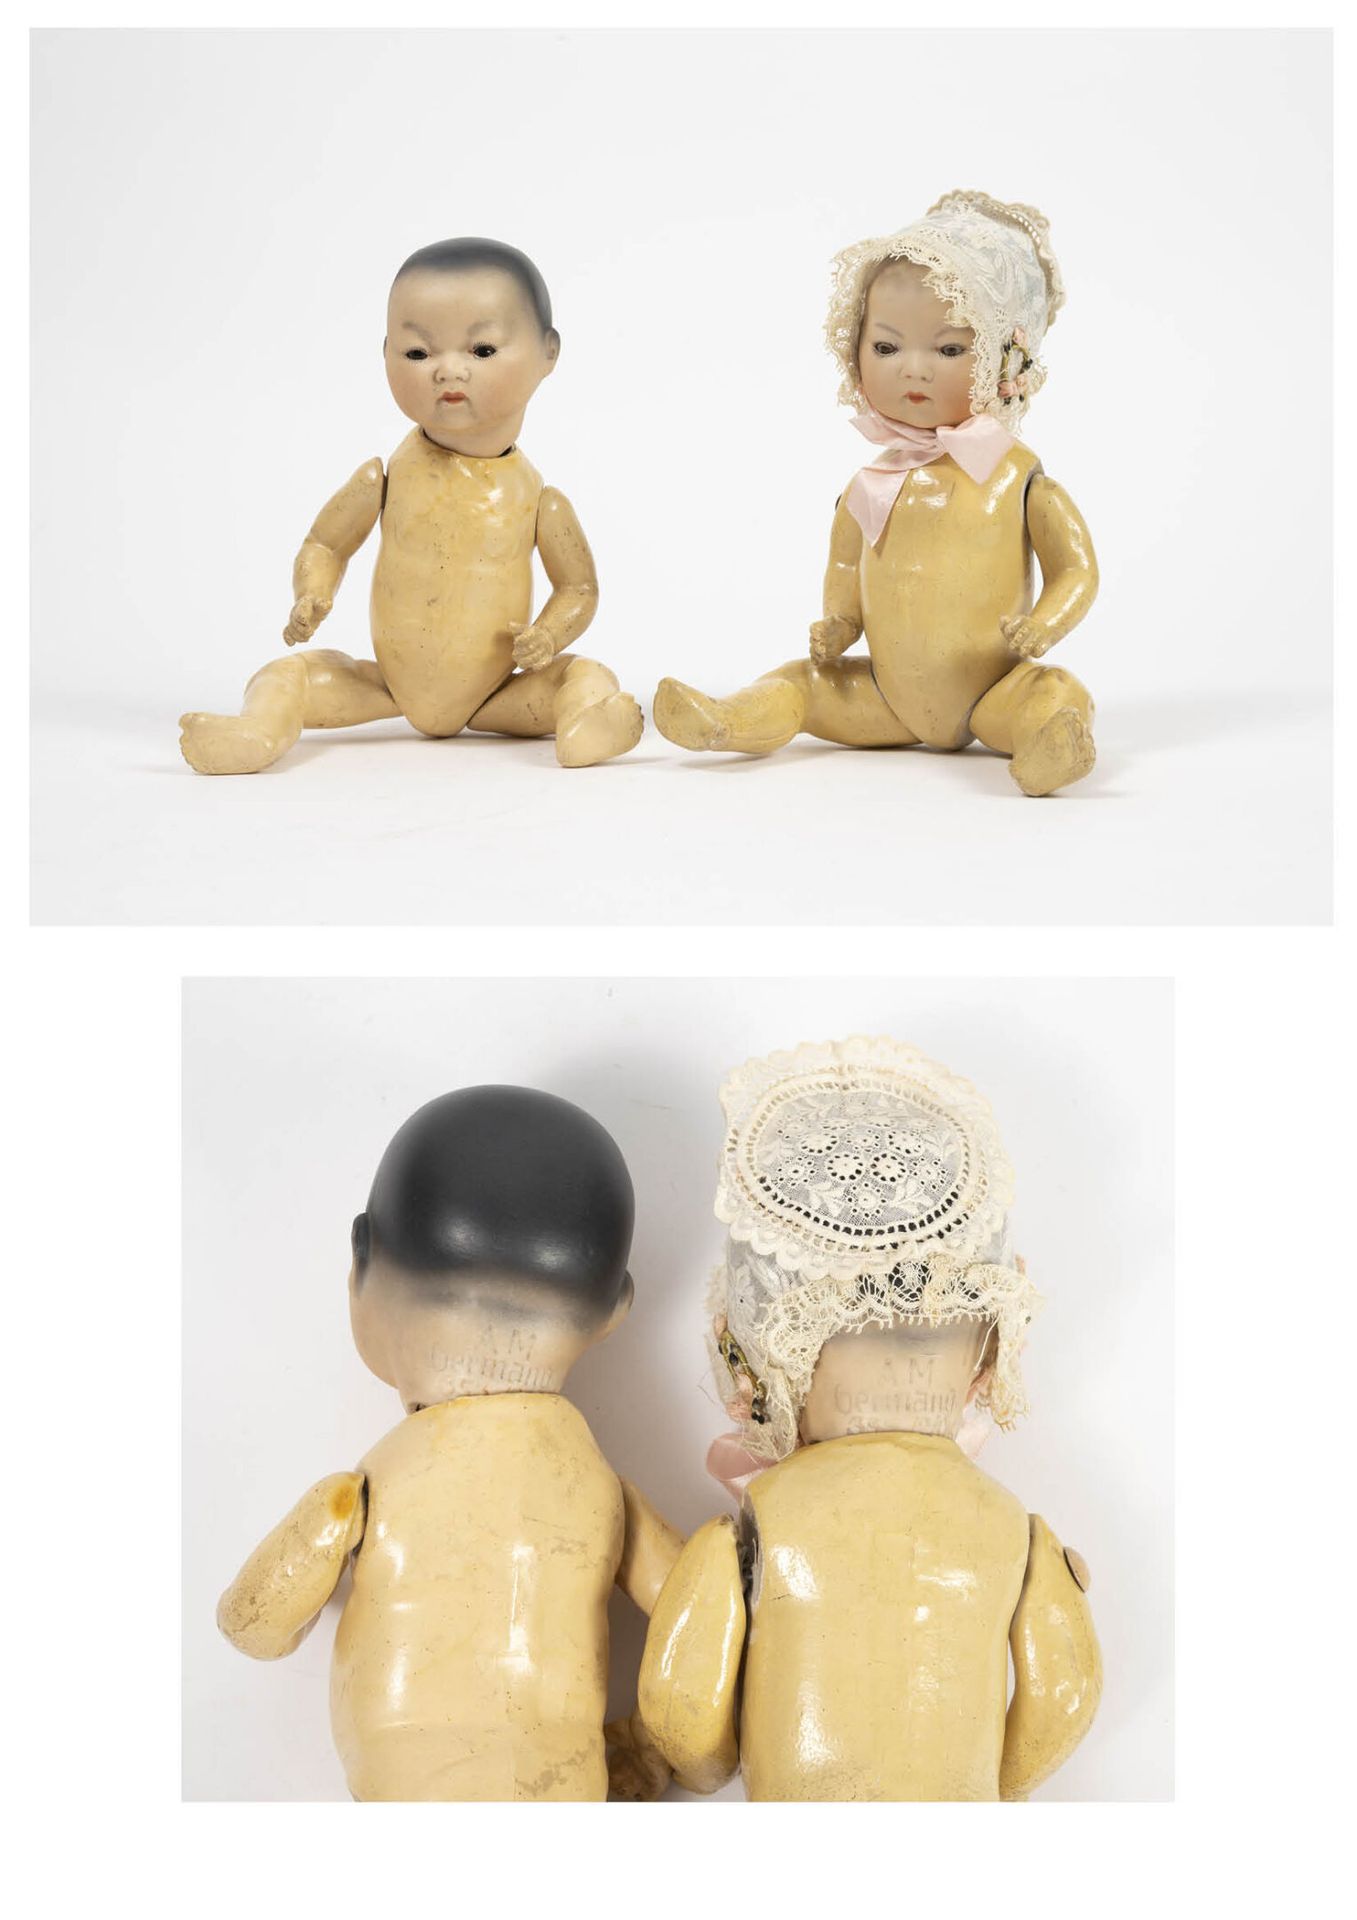 ARMAND MARSEILLE 两个亚洲双胞胎娃娃。

全瓷头，头发有彩绘，嘴巴紧闭，脖子上有 "AM德国353.72/OK "的字样，眼睛是移动的斜面。

&hellip;